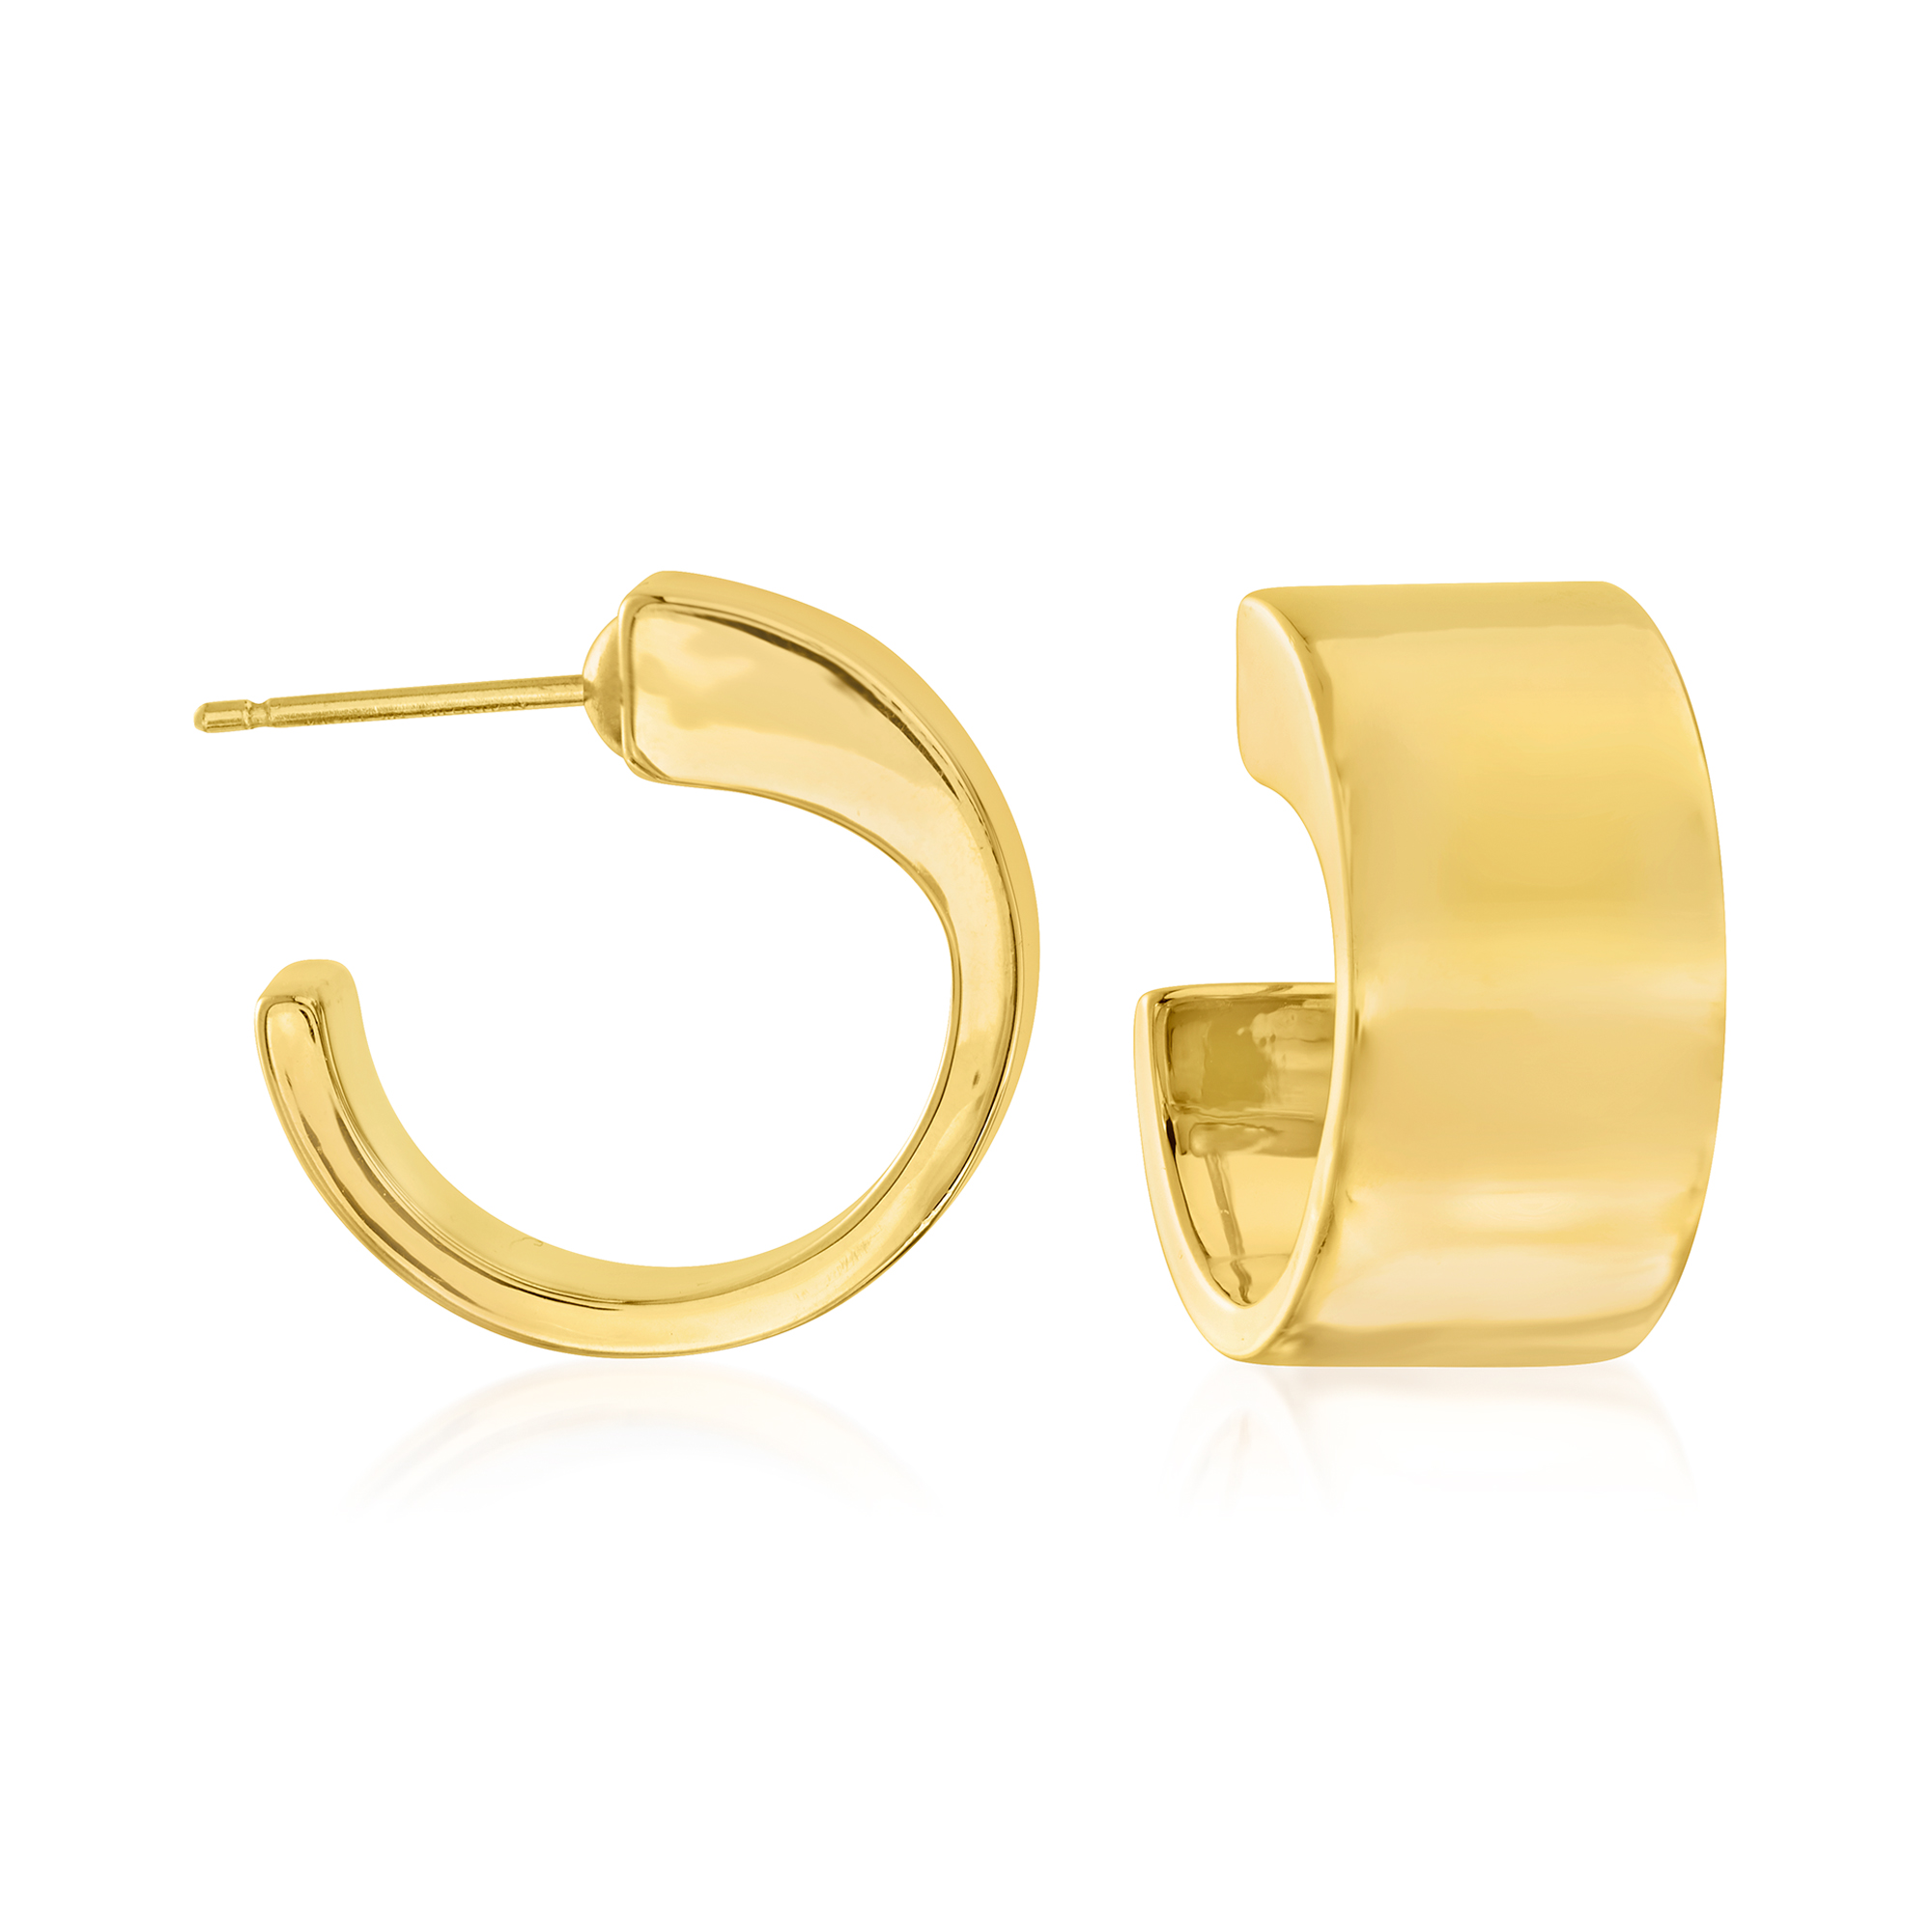 Italian Andiamo 14kt Yellow Gold Over Resin C-Hoop Earrings | Ross